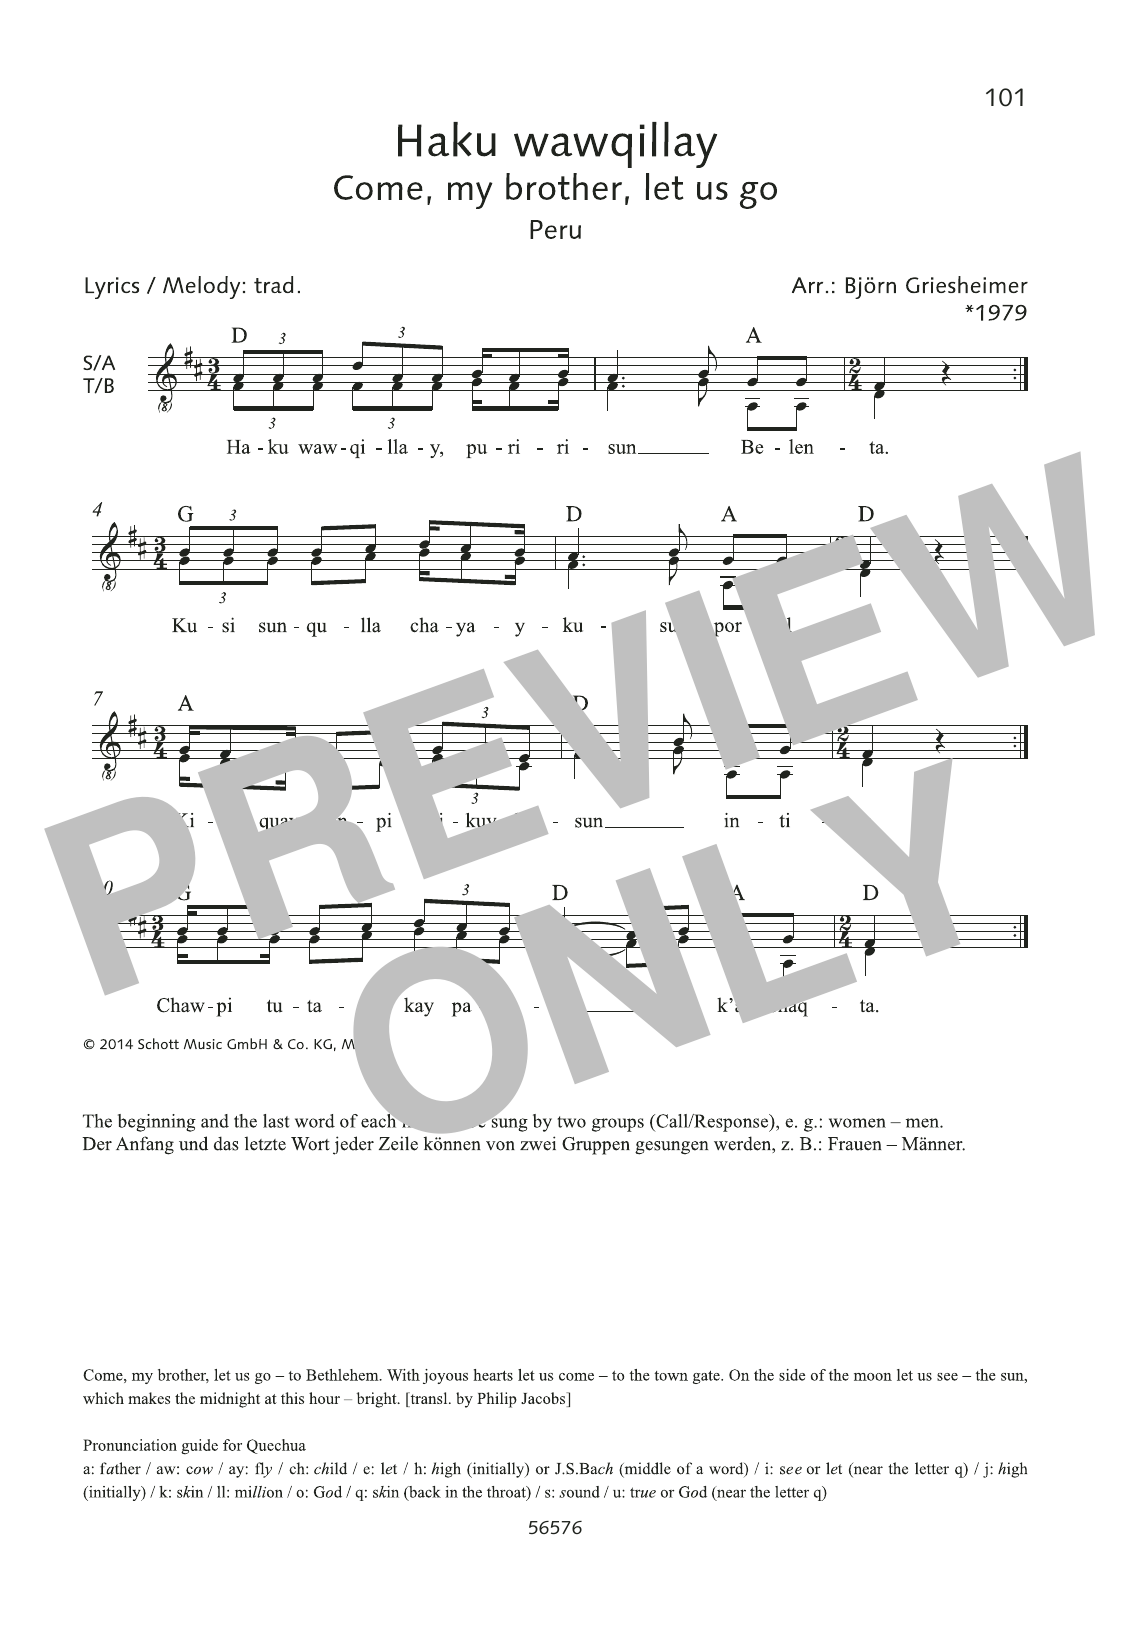 Download Björn Griesheimer Haku wawqillay Sheet Music and learn how to play SATB Choir PDF digital score in minutes